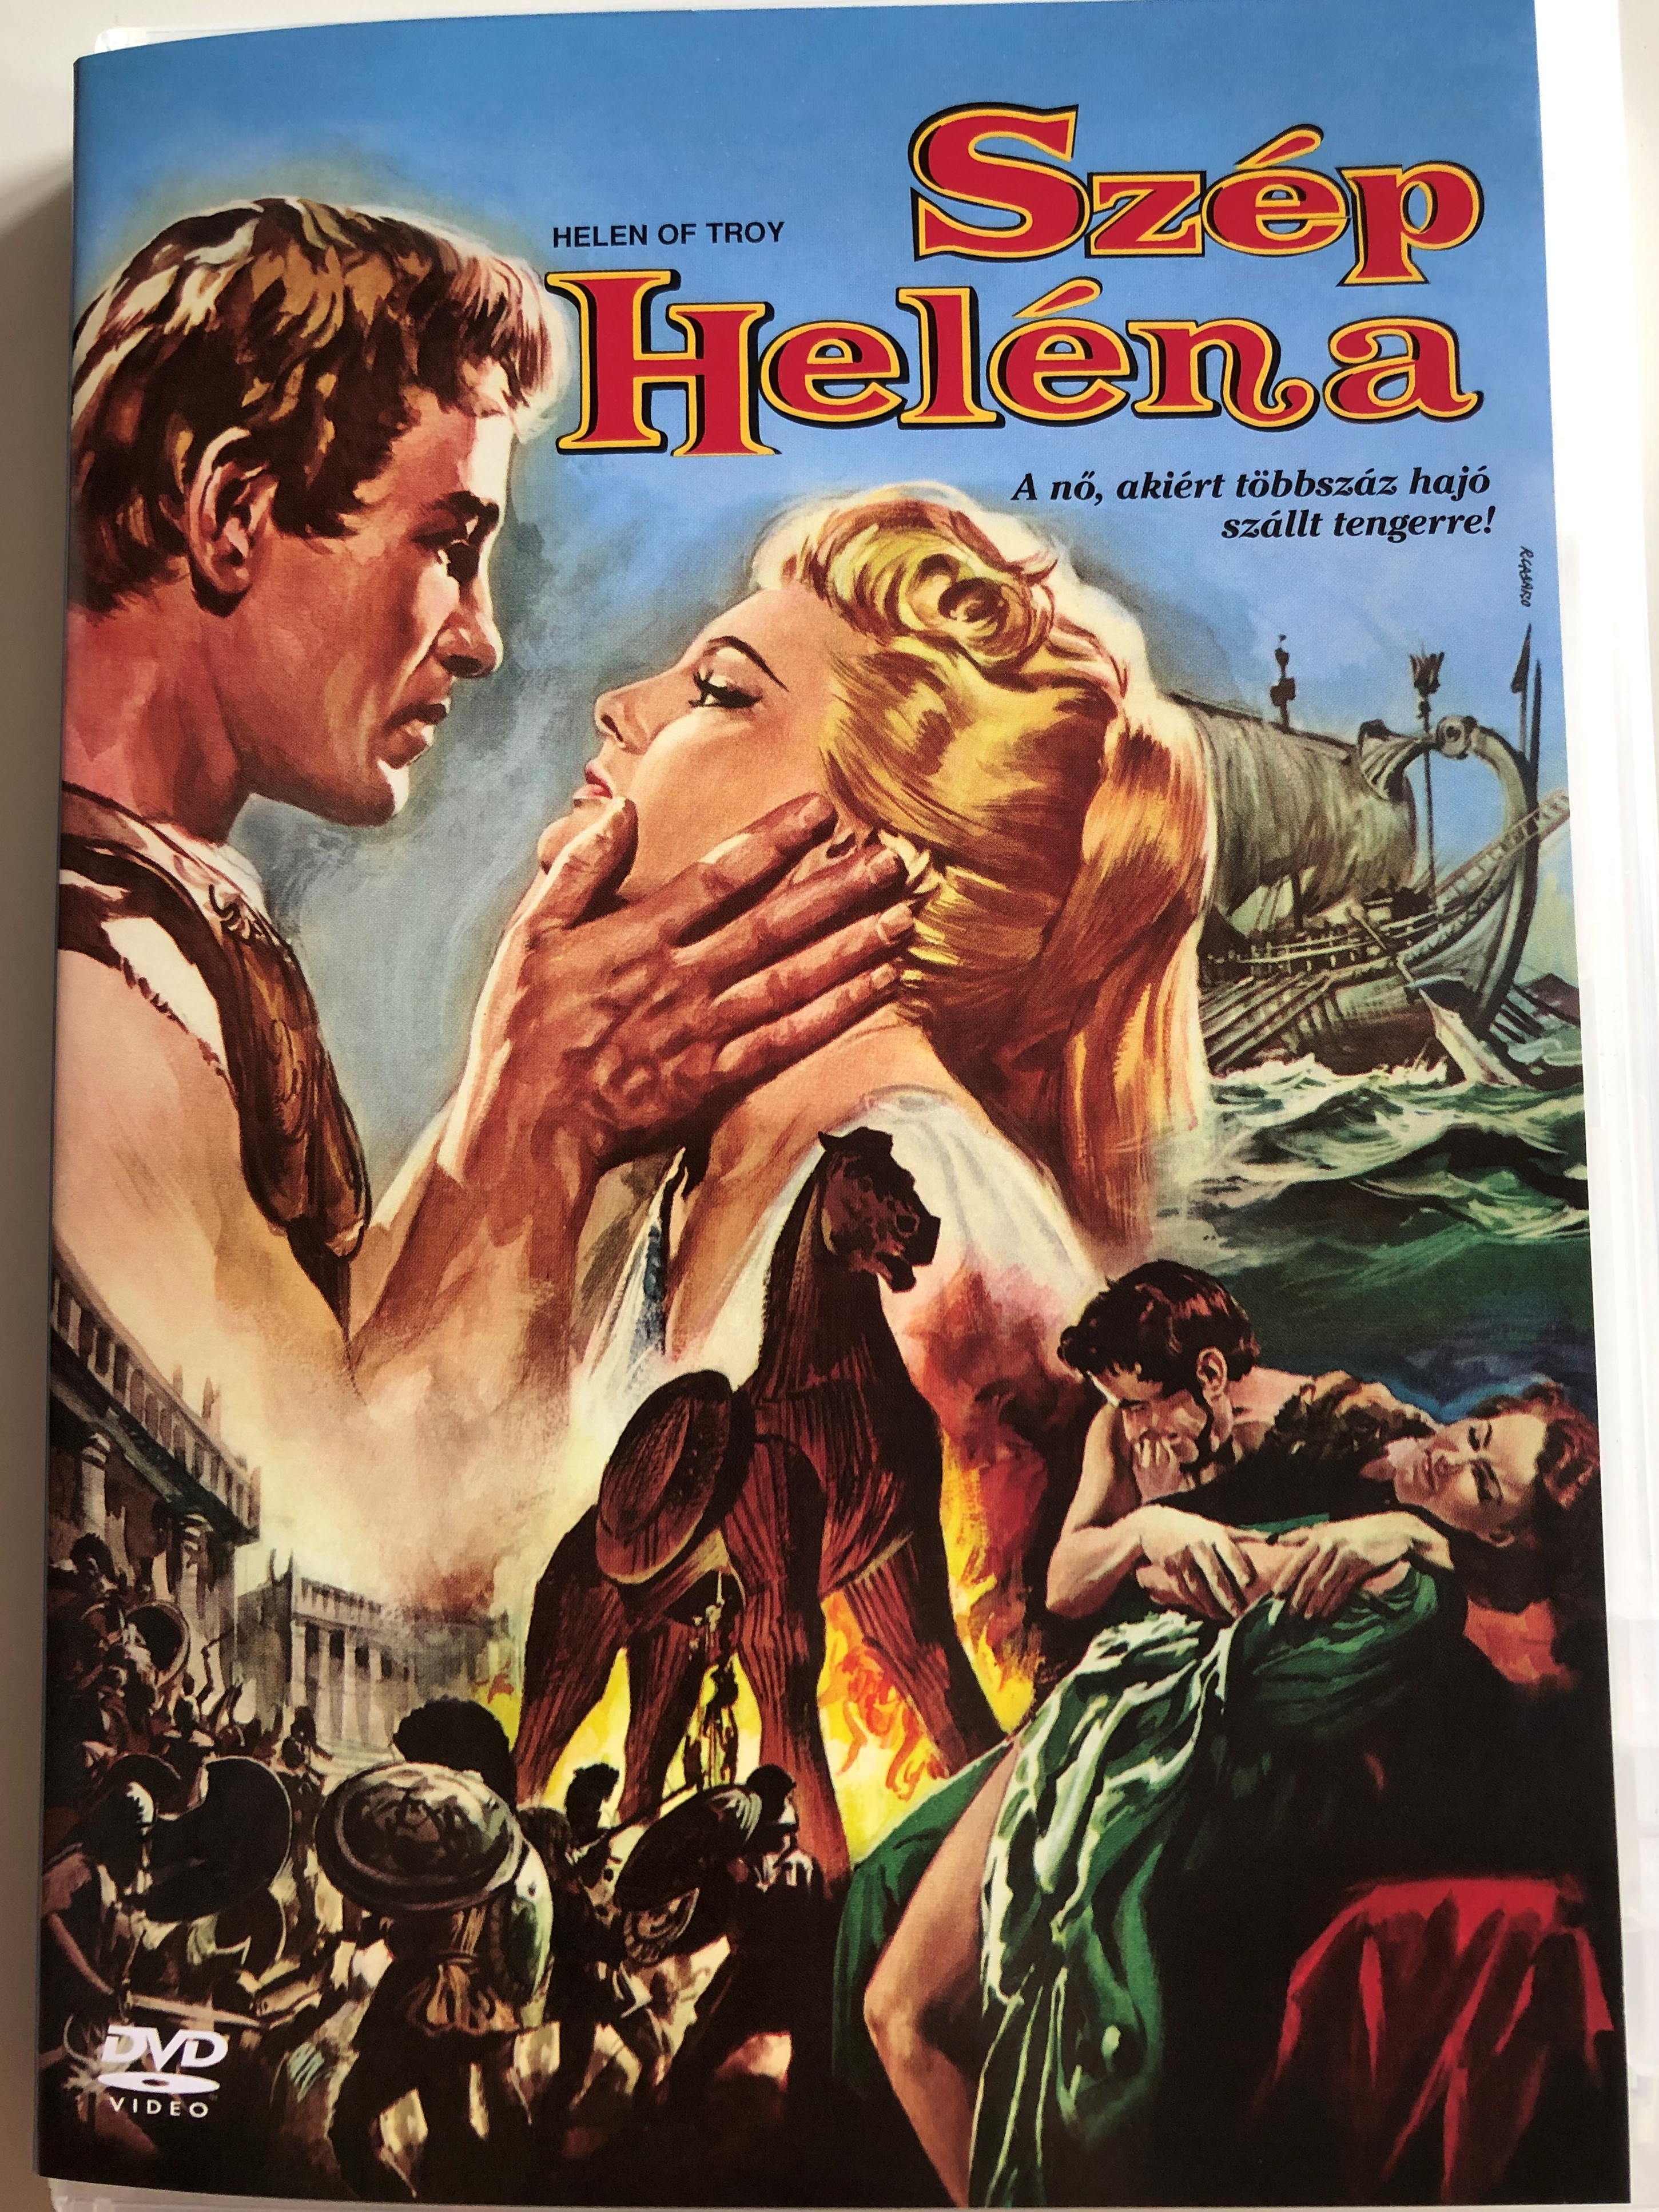 helen-of-troy-dvd-1956-sz-p-hel-na-directed-by-robert-wise-1.jpg